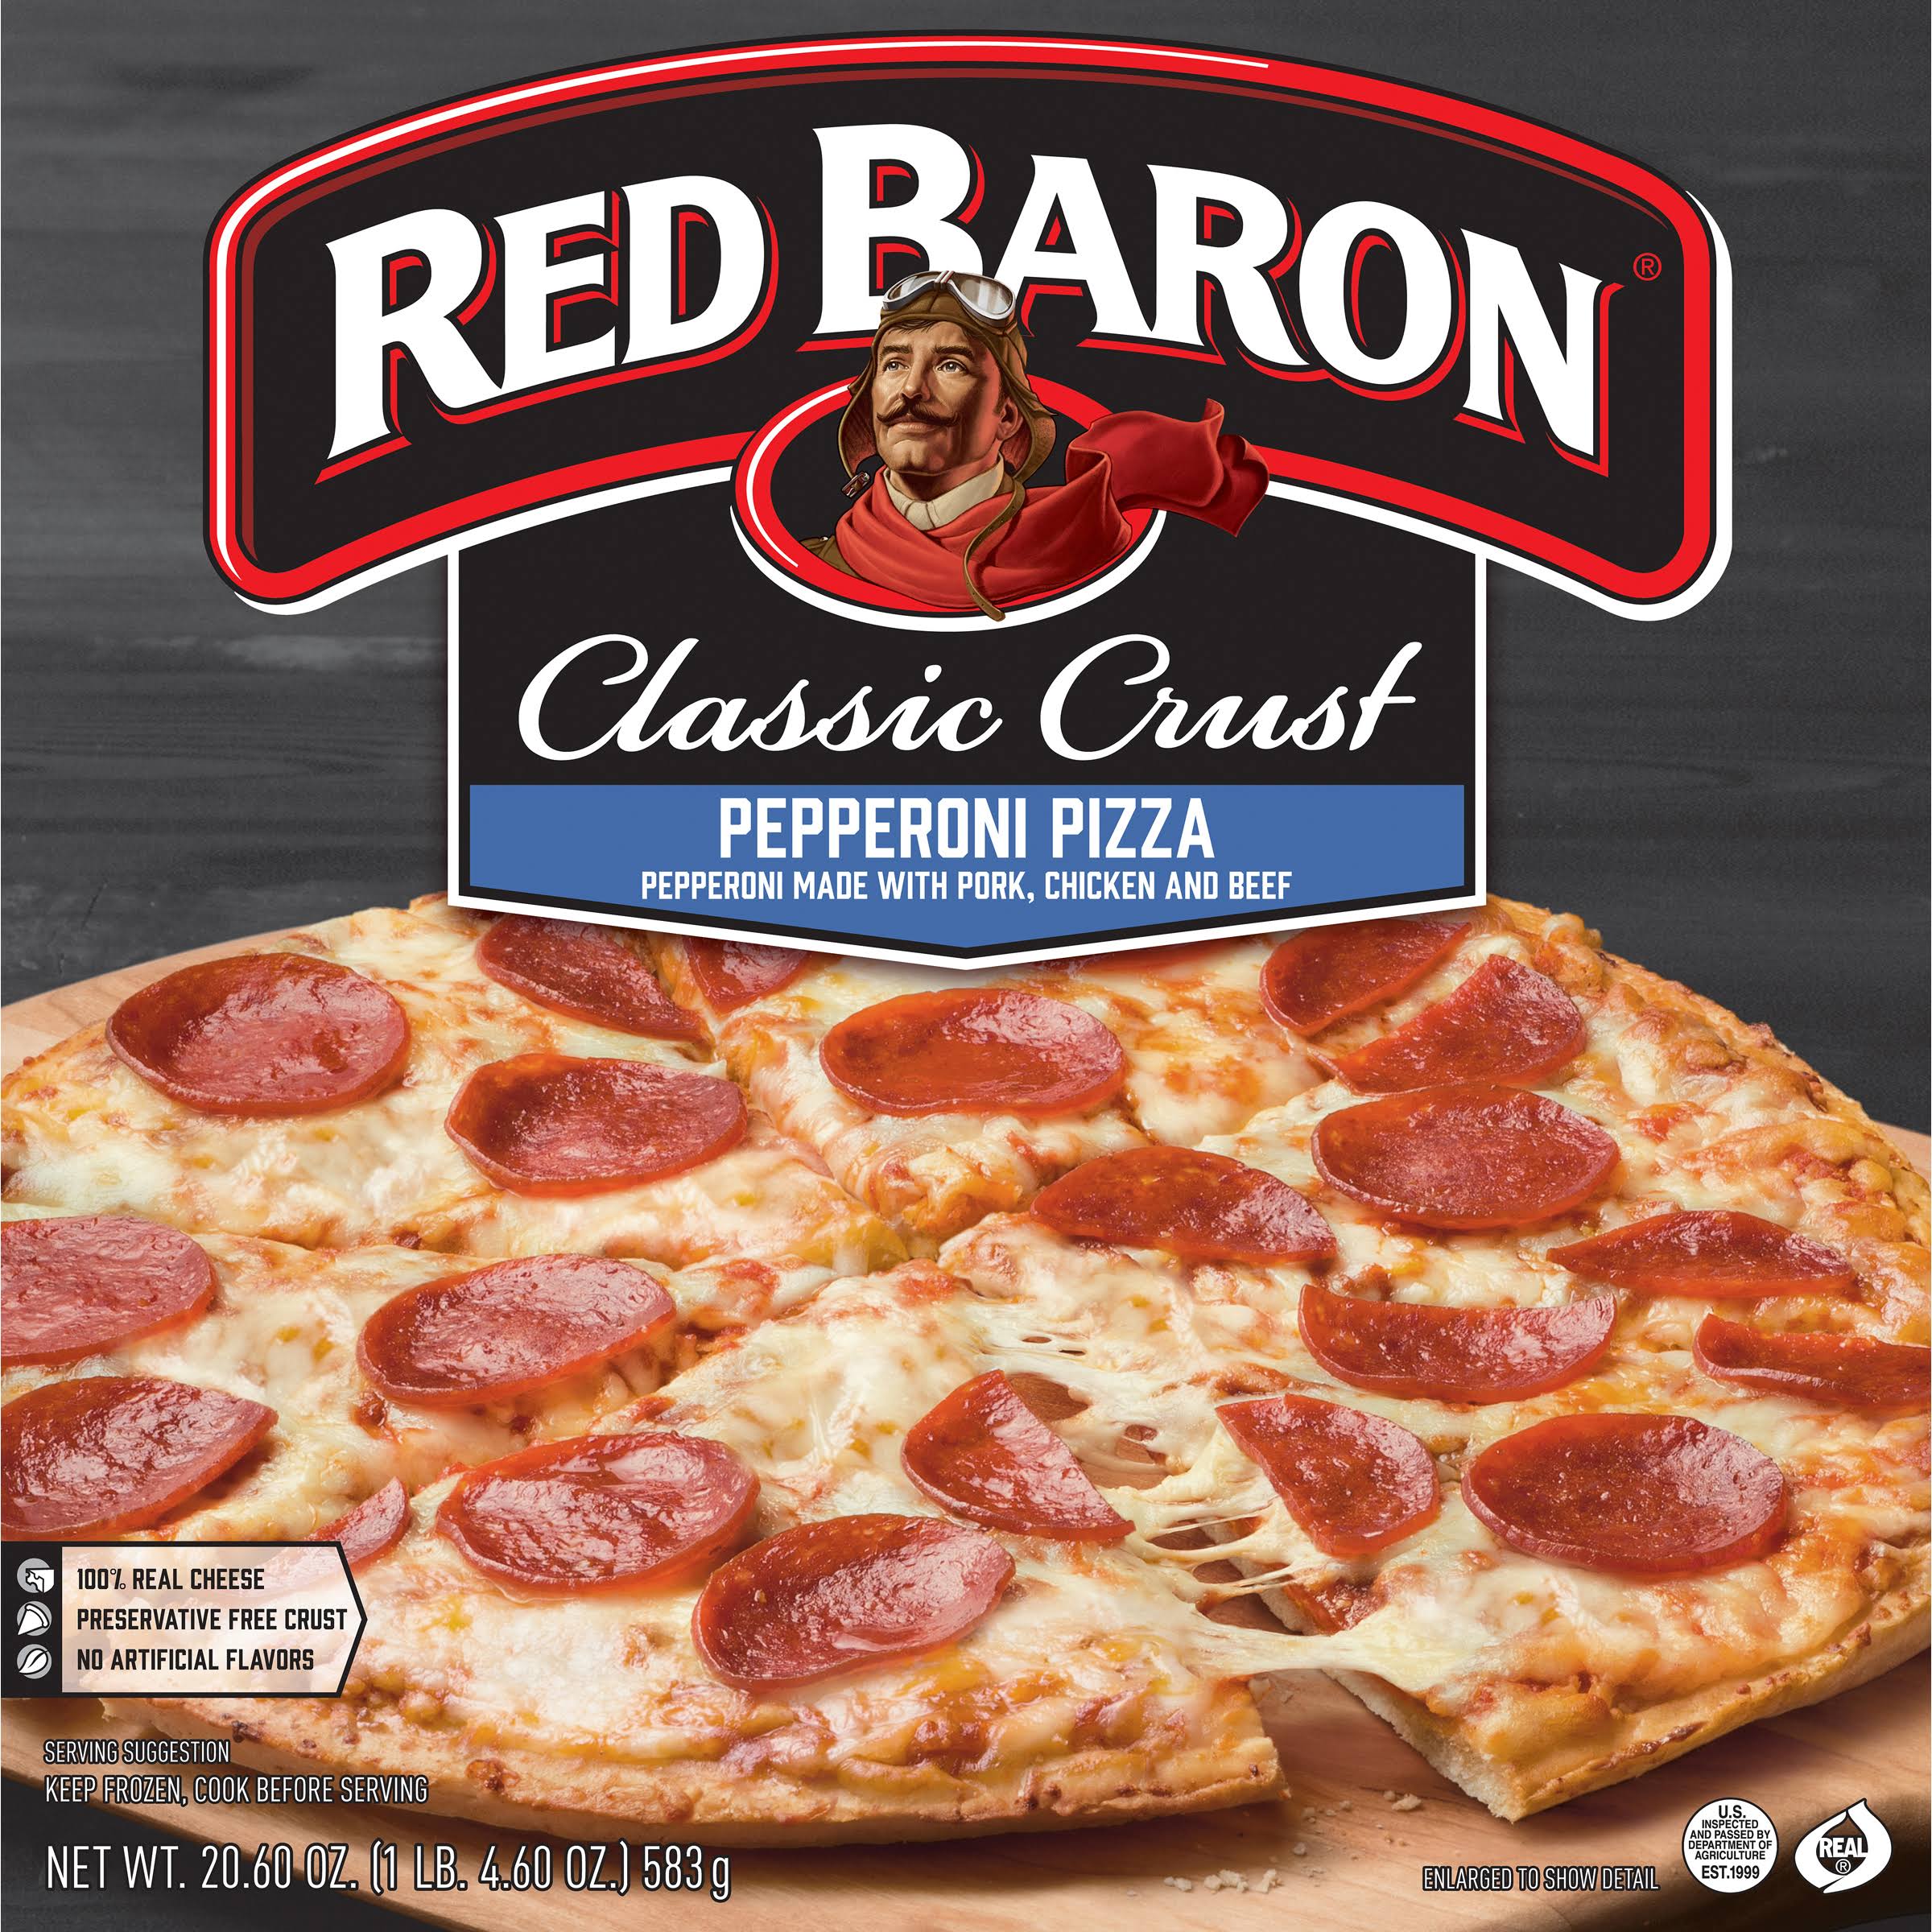 Red Baron Classic Crust Pepperoni Pizza - 20.60oz